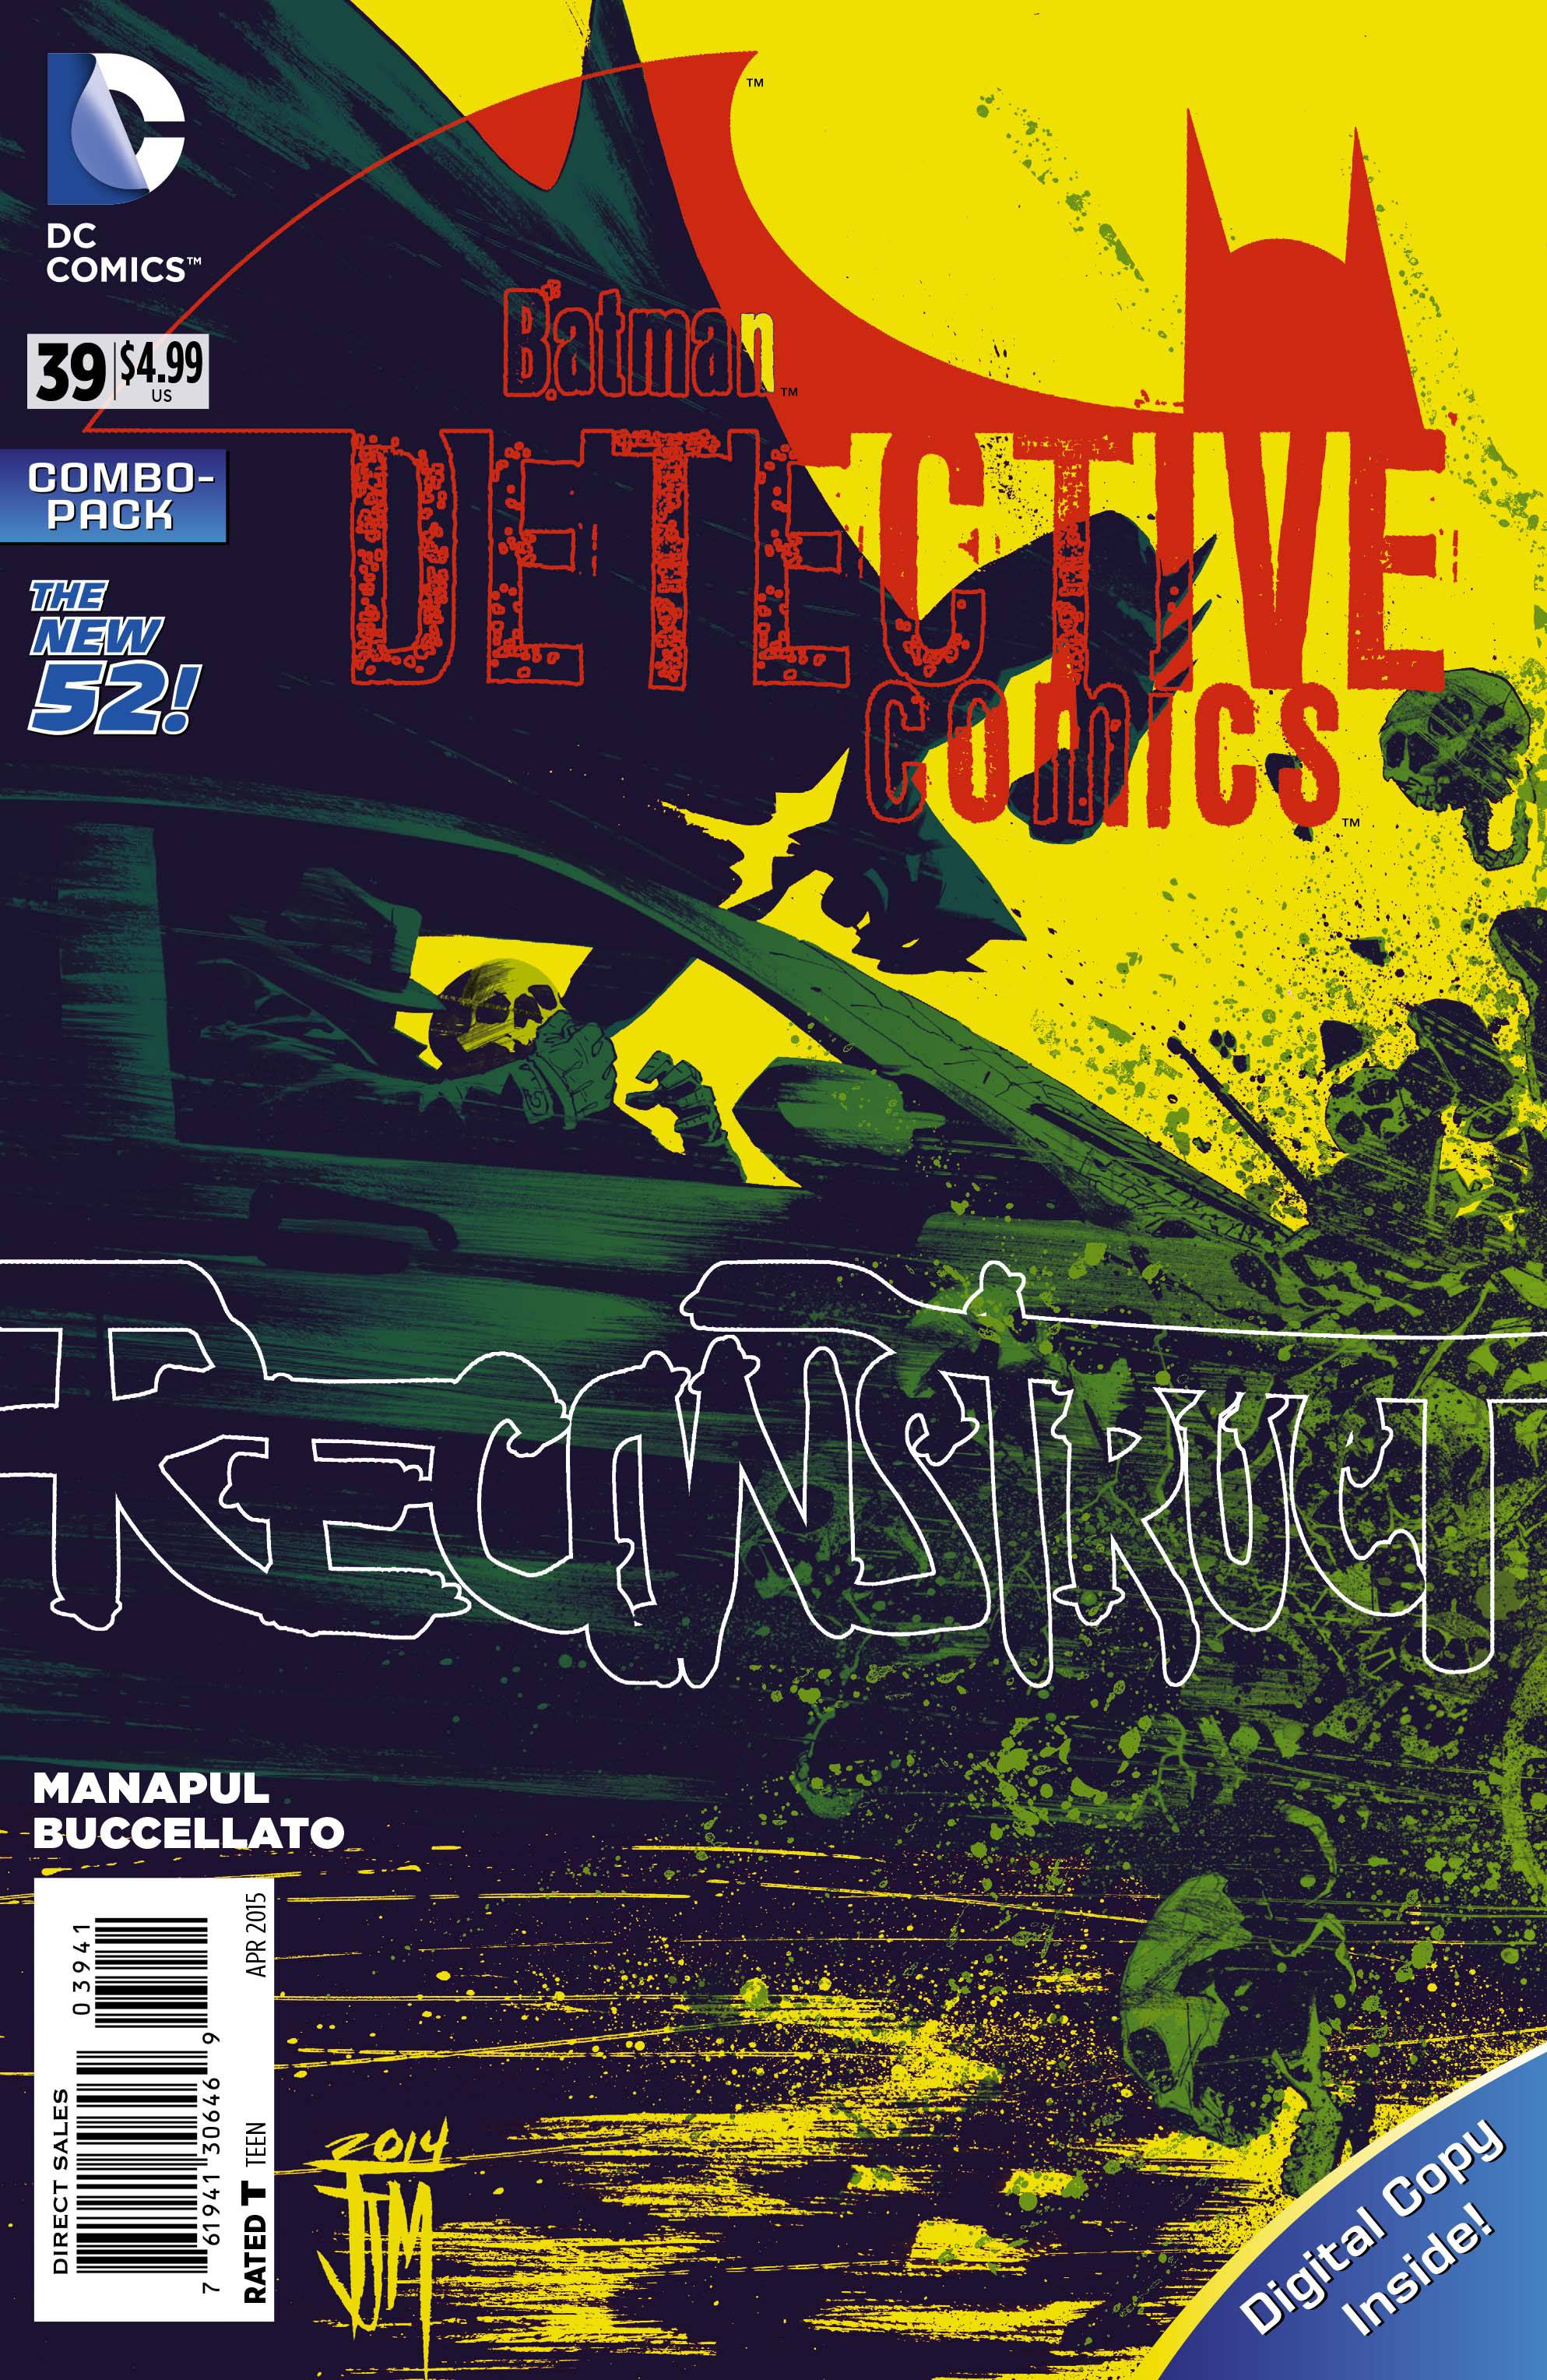 Detective Comics #39 Combo Pack